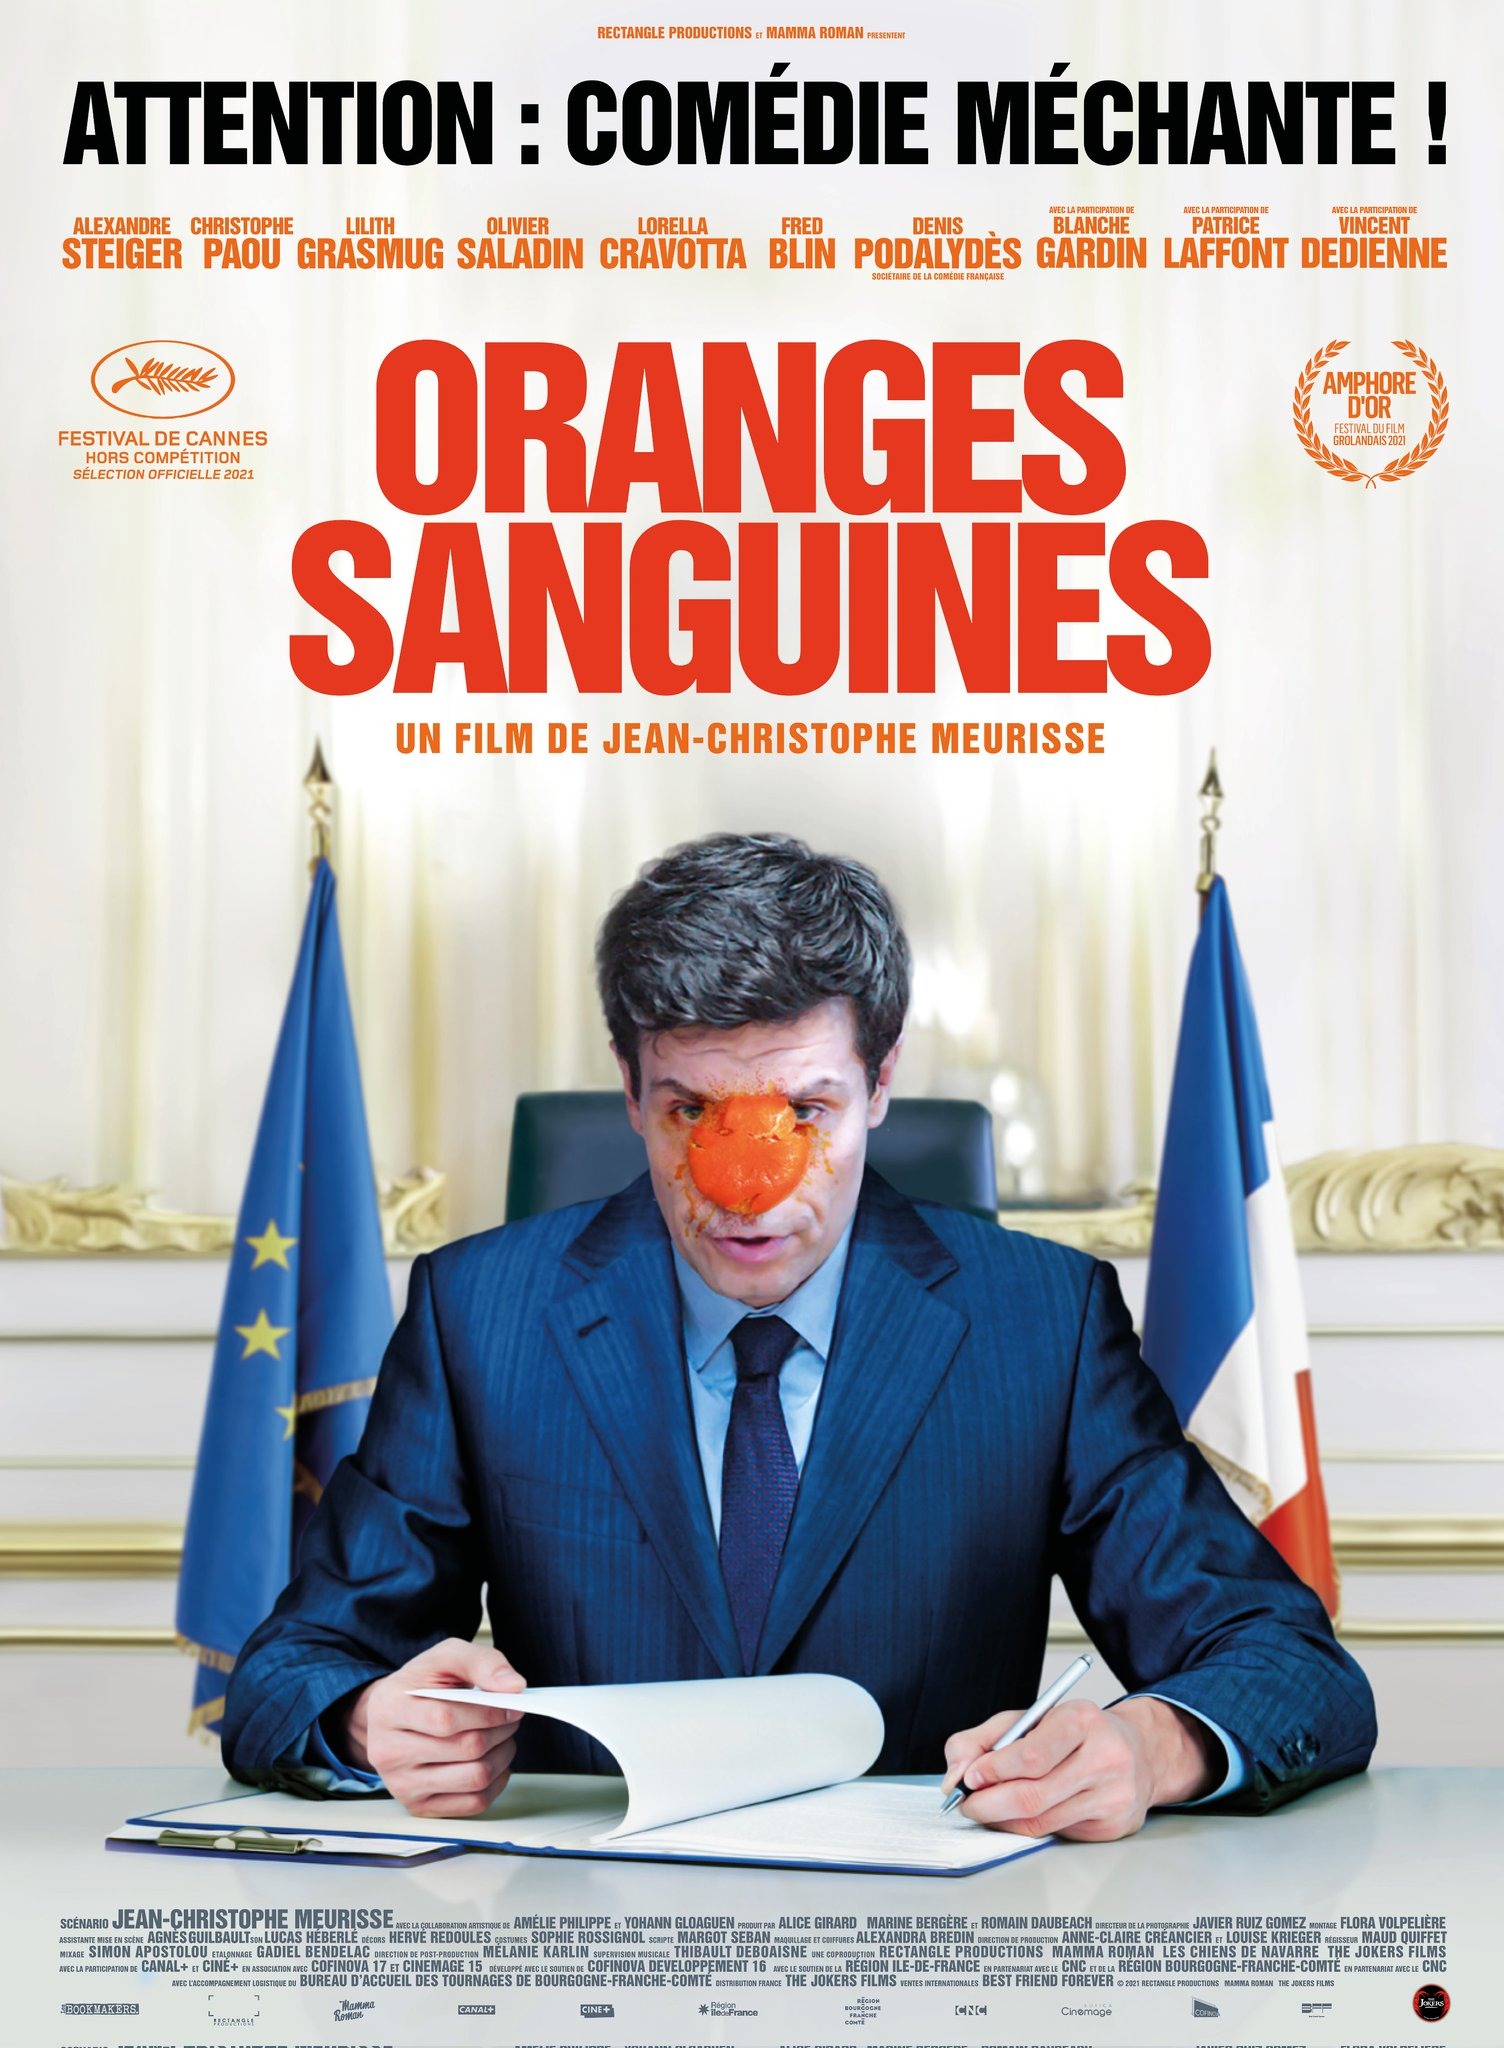 Mega Sized Movie Poster Image for Oranges sanguines (#1 of 2)